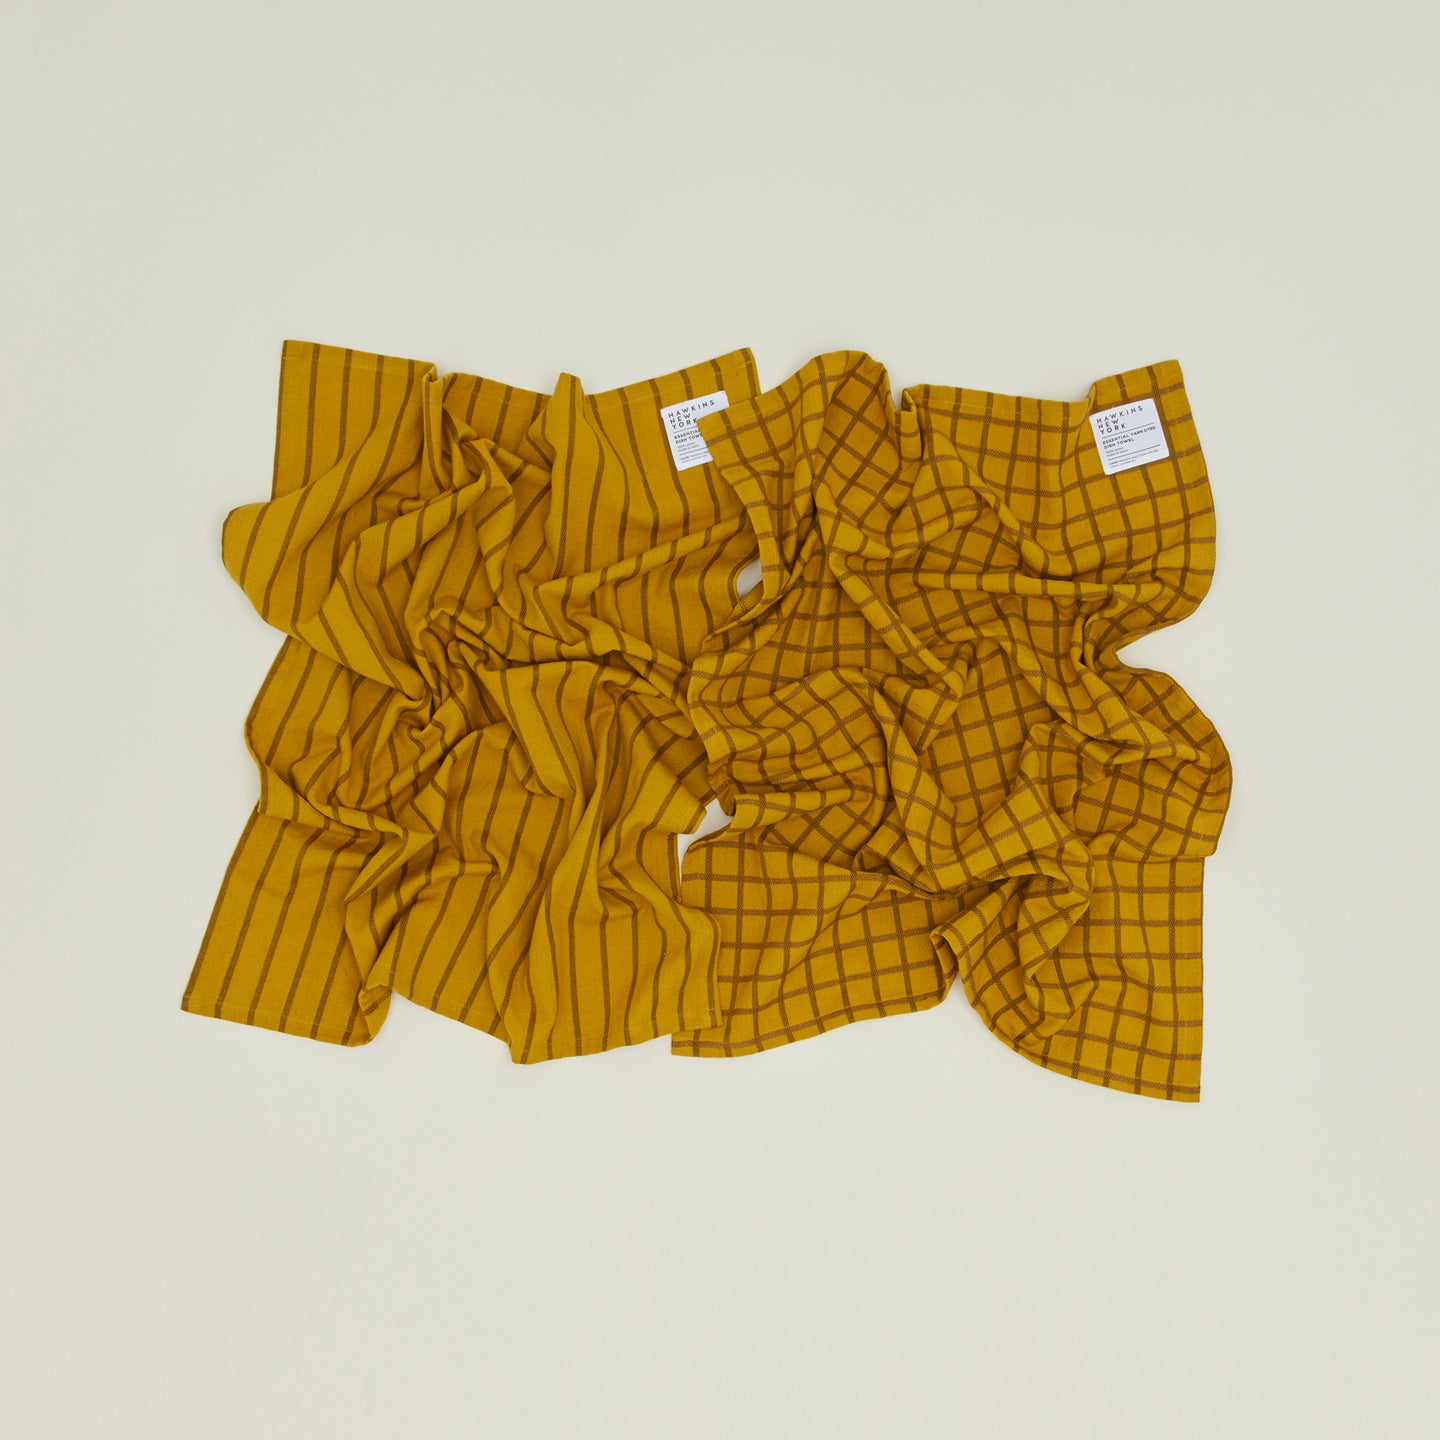 Essential Yarn Dyed Dish Towel, Set of 2 - Mustard/Bronze